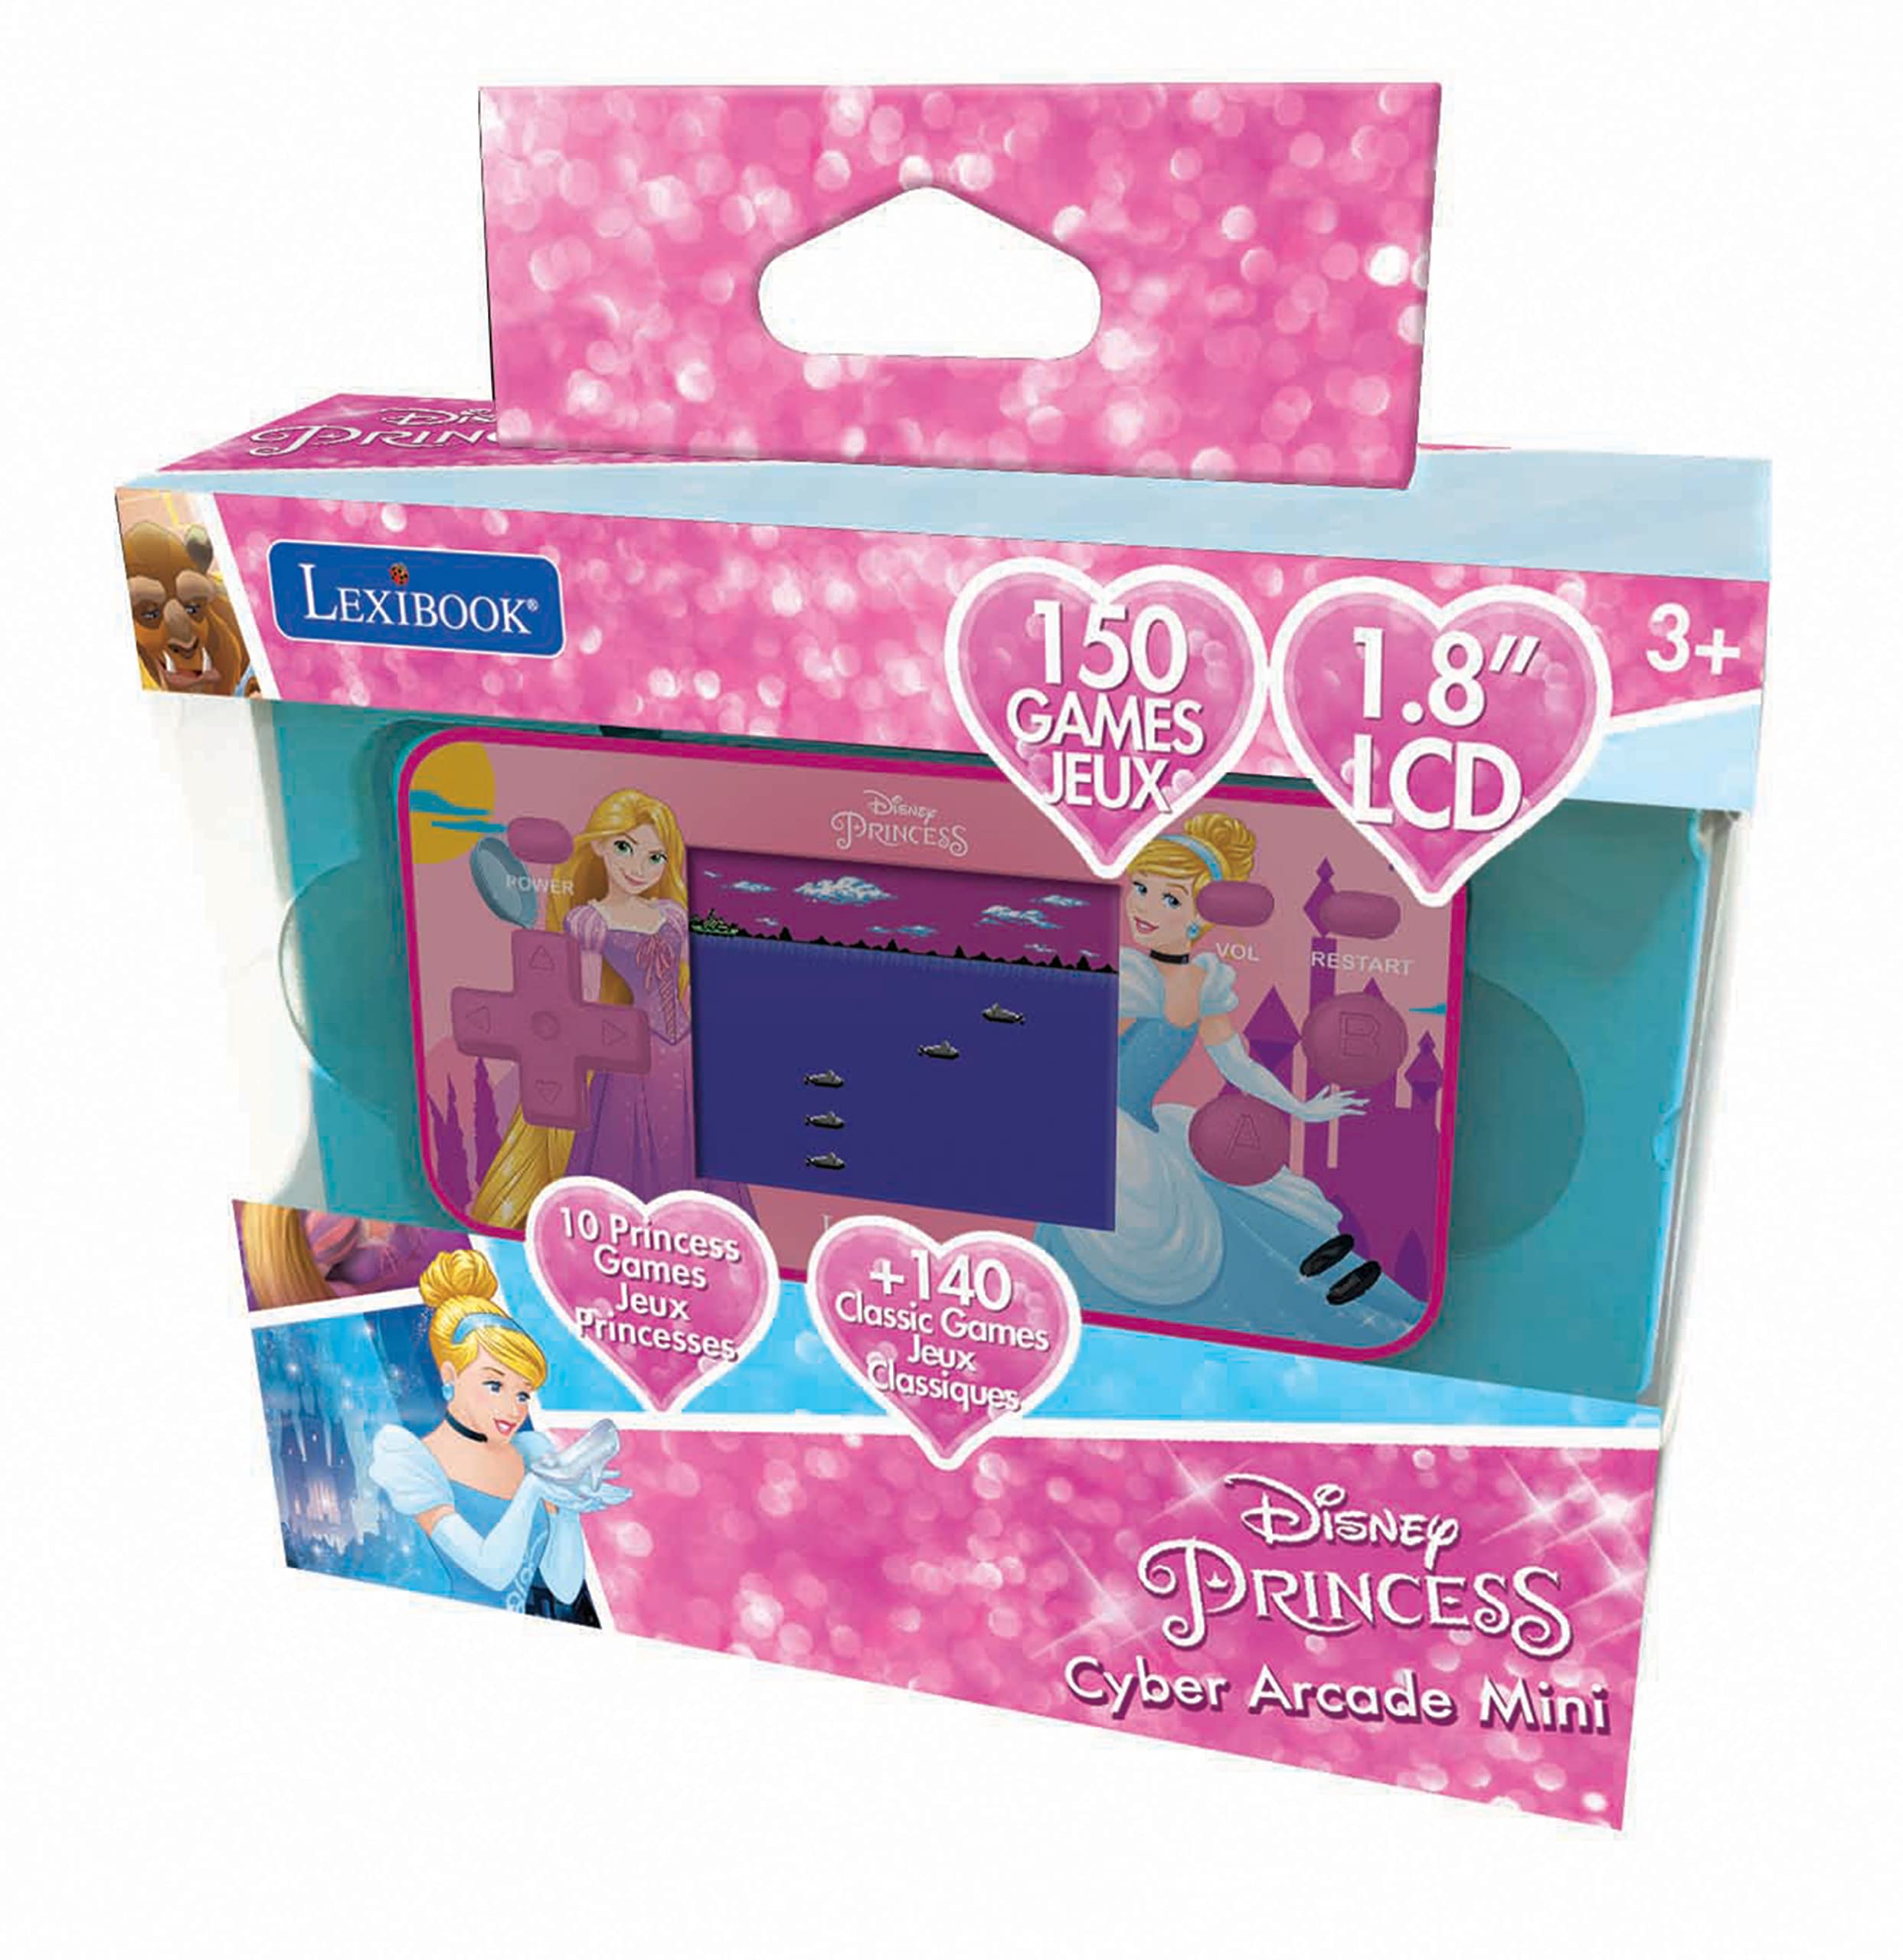 LEXiBOOK JL1895DP Disney Princess Handheld Console with 150 Games, Cyber Arcade Pocket, Pink